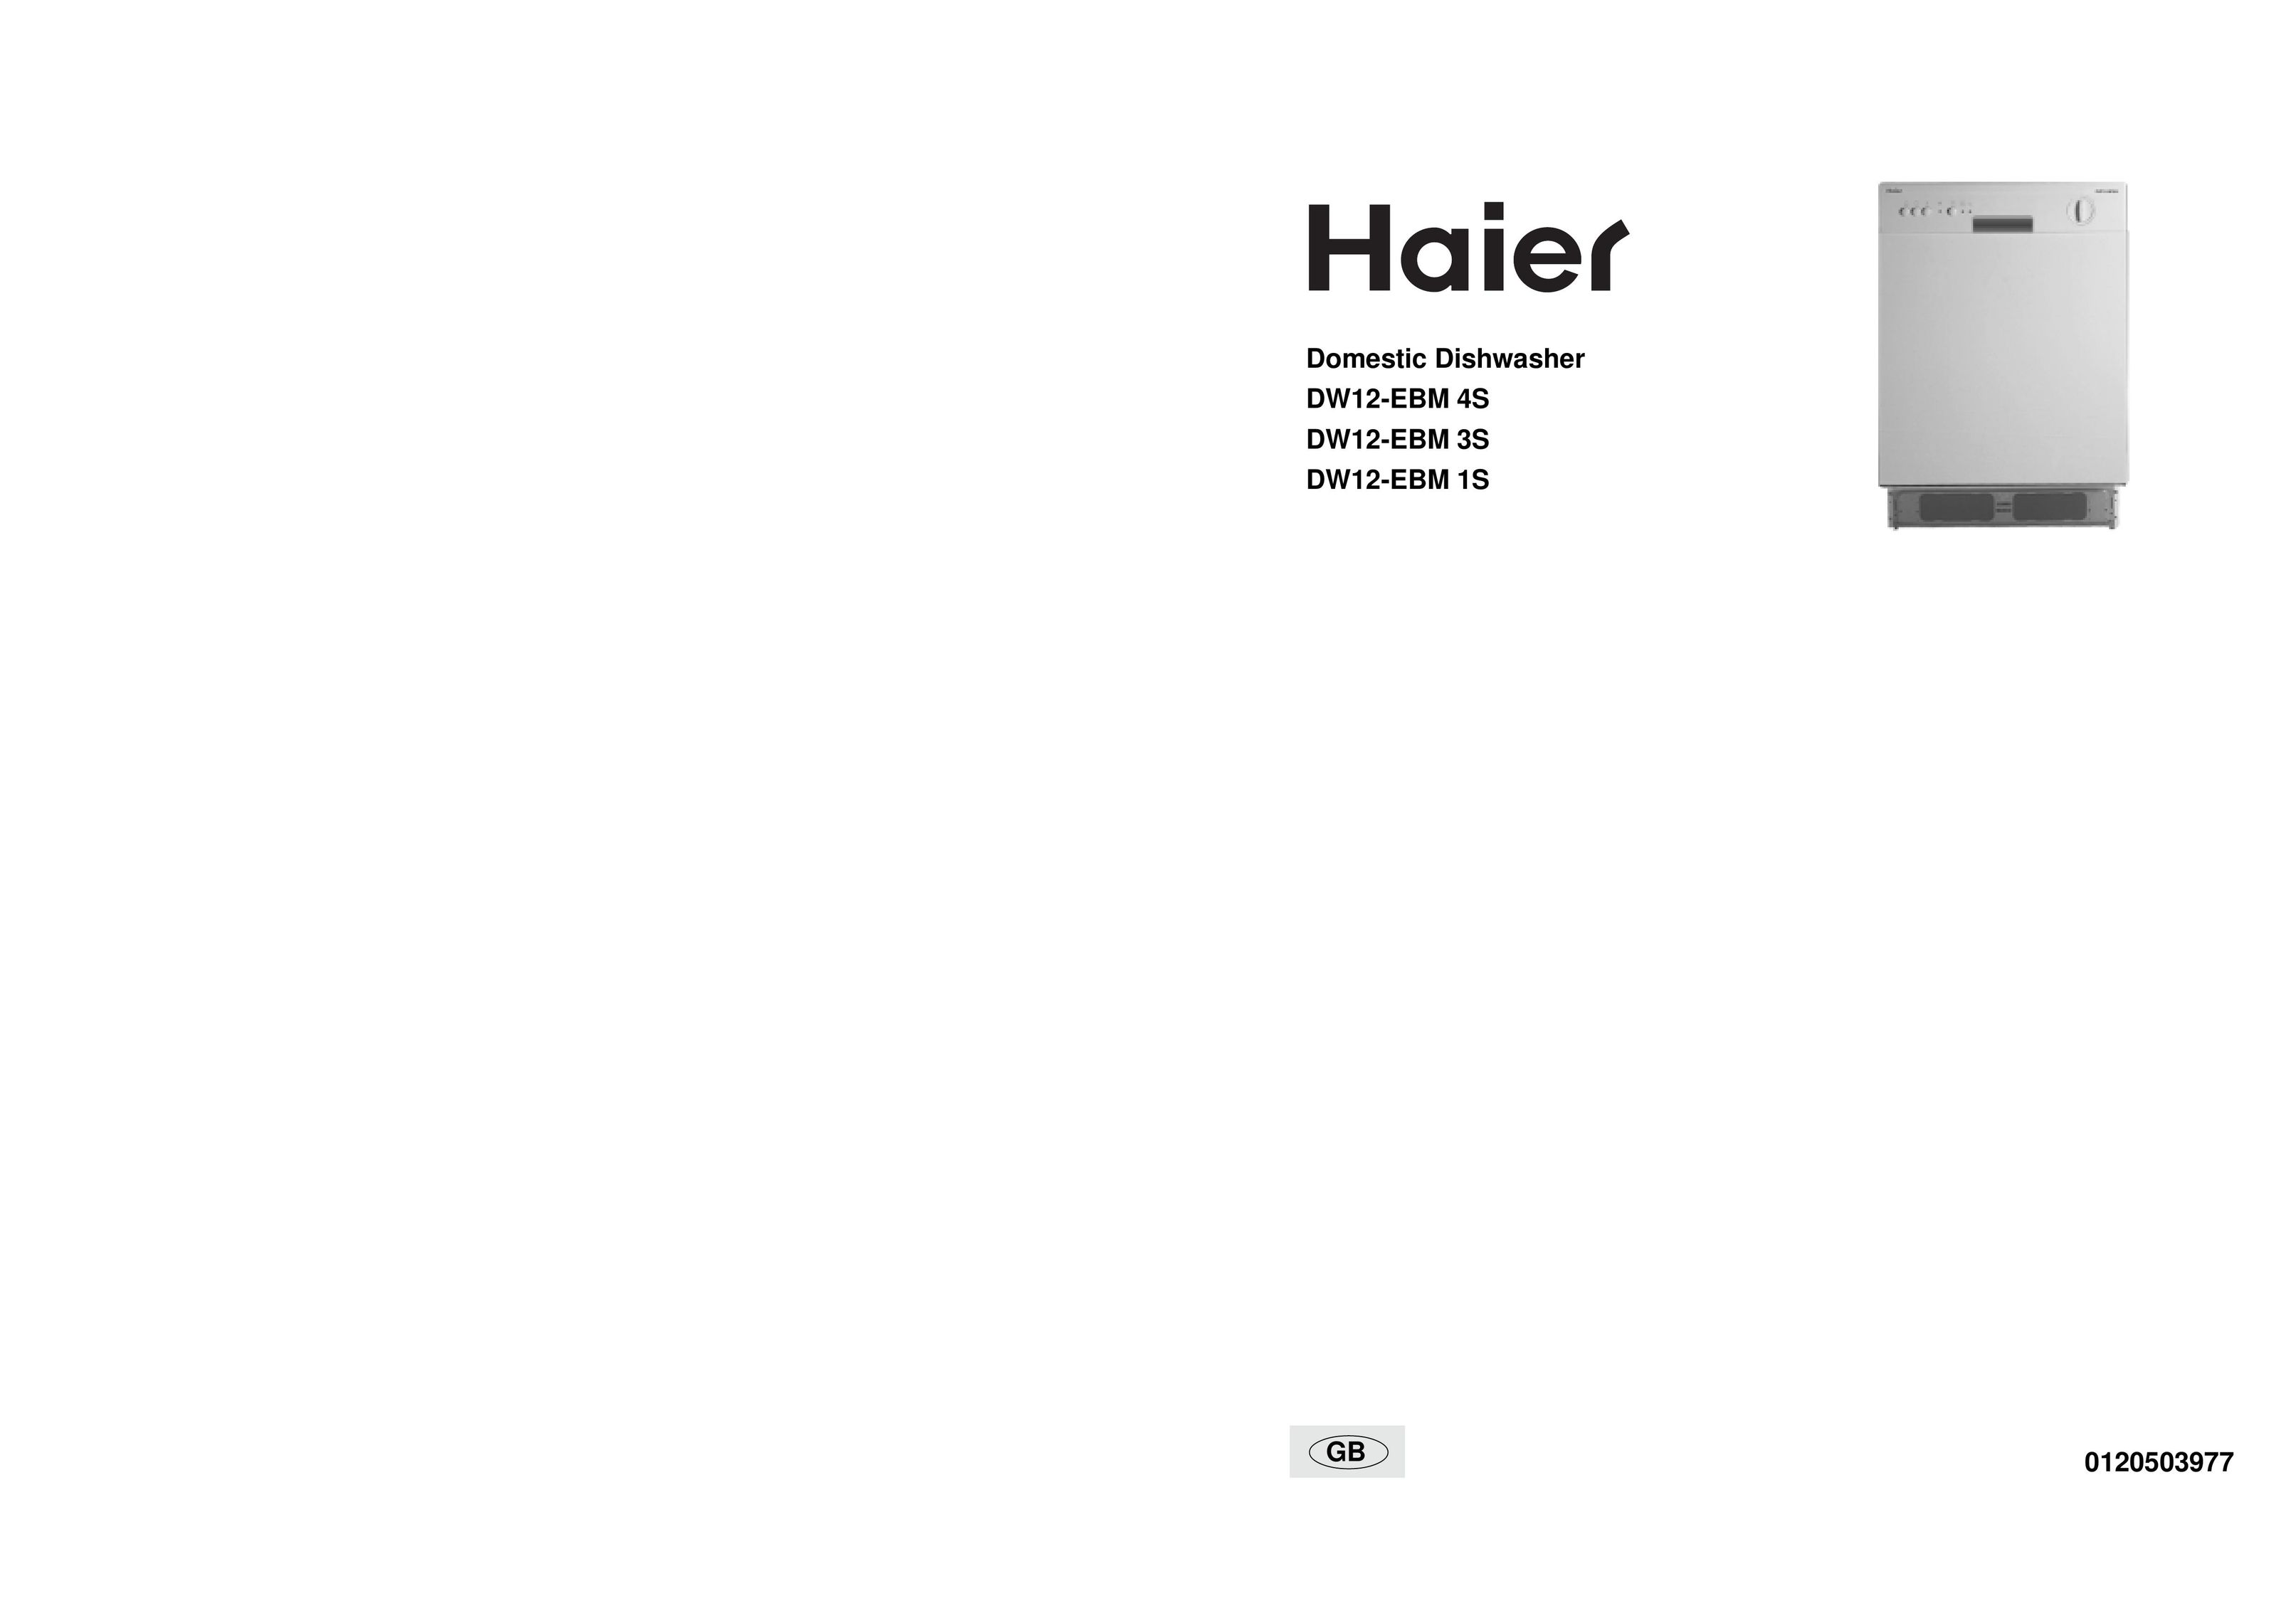 Haier DW12-EBM 1S Dishwasher User Manual